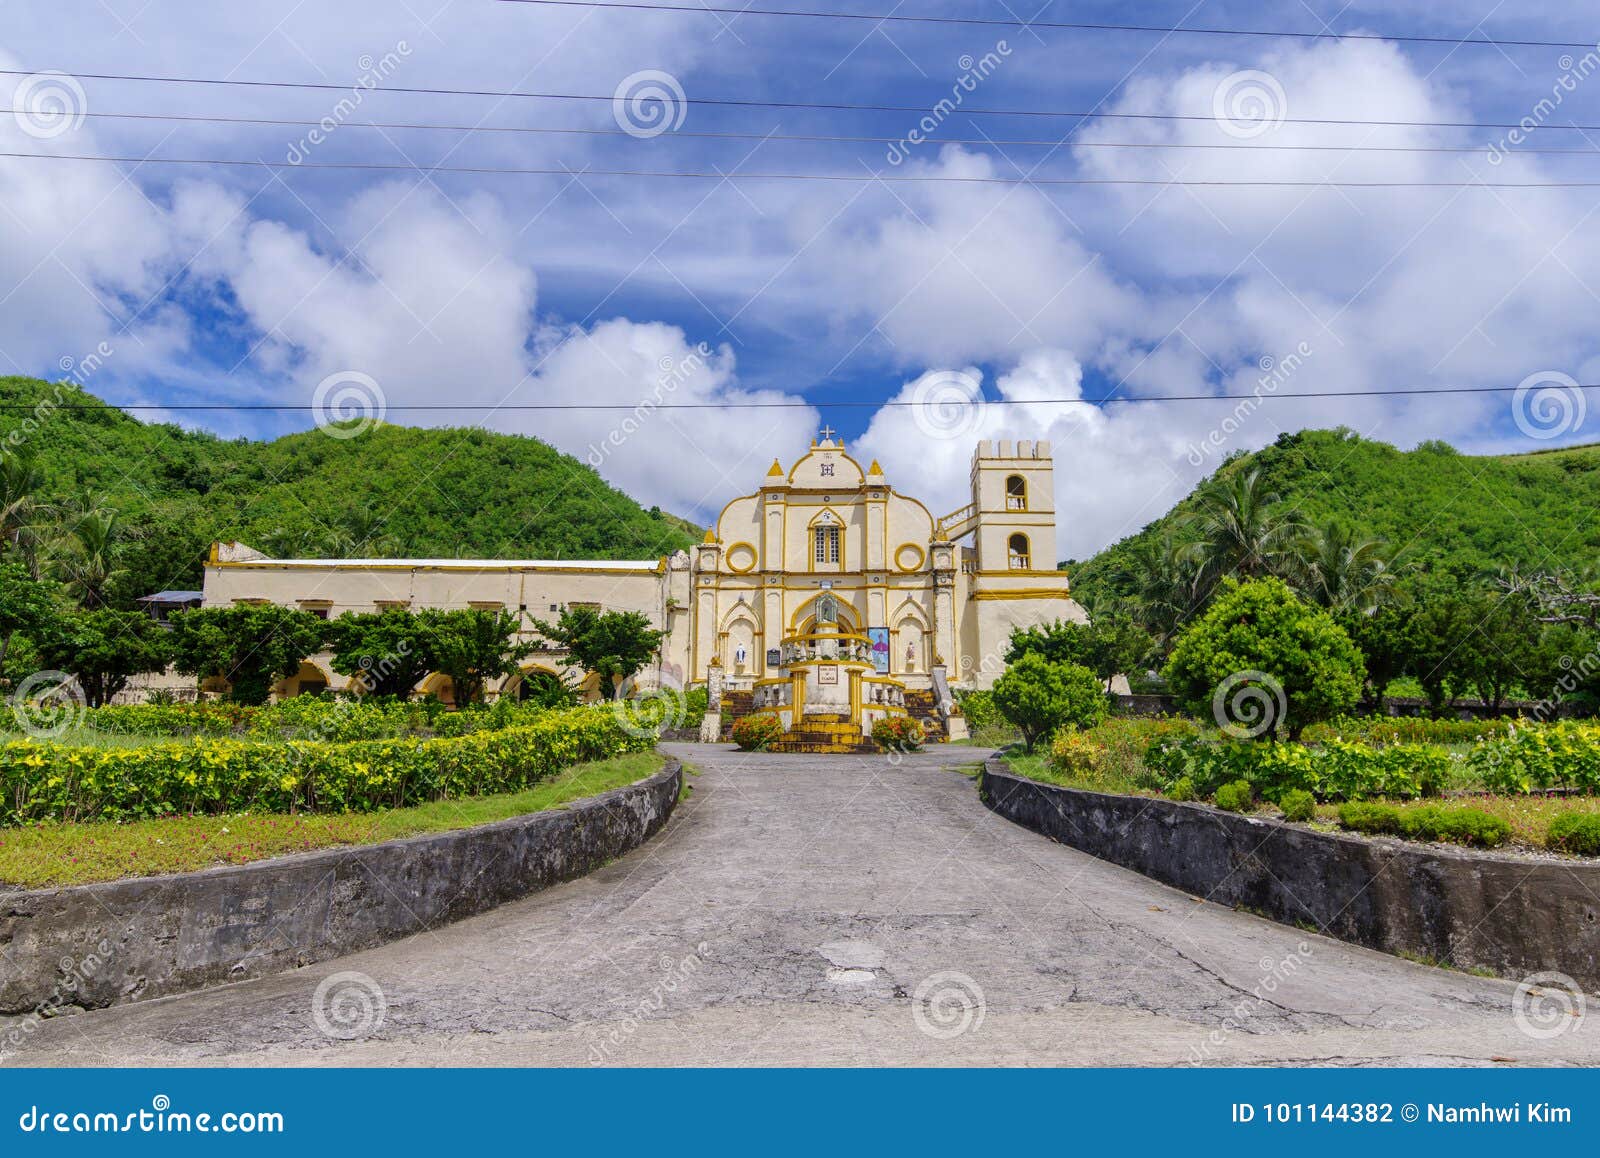 san jose de obrero church view from road, batanes